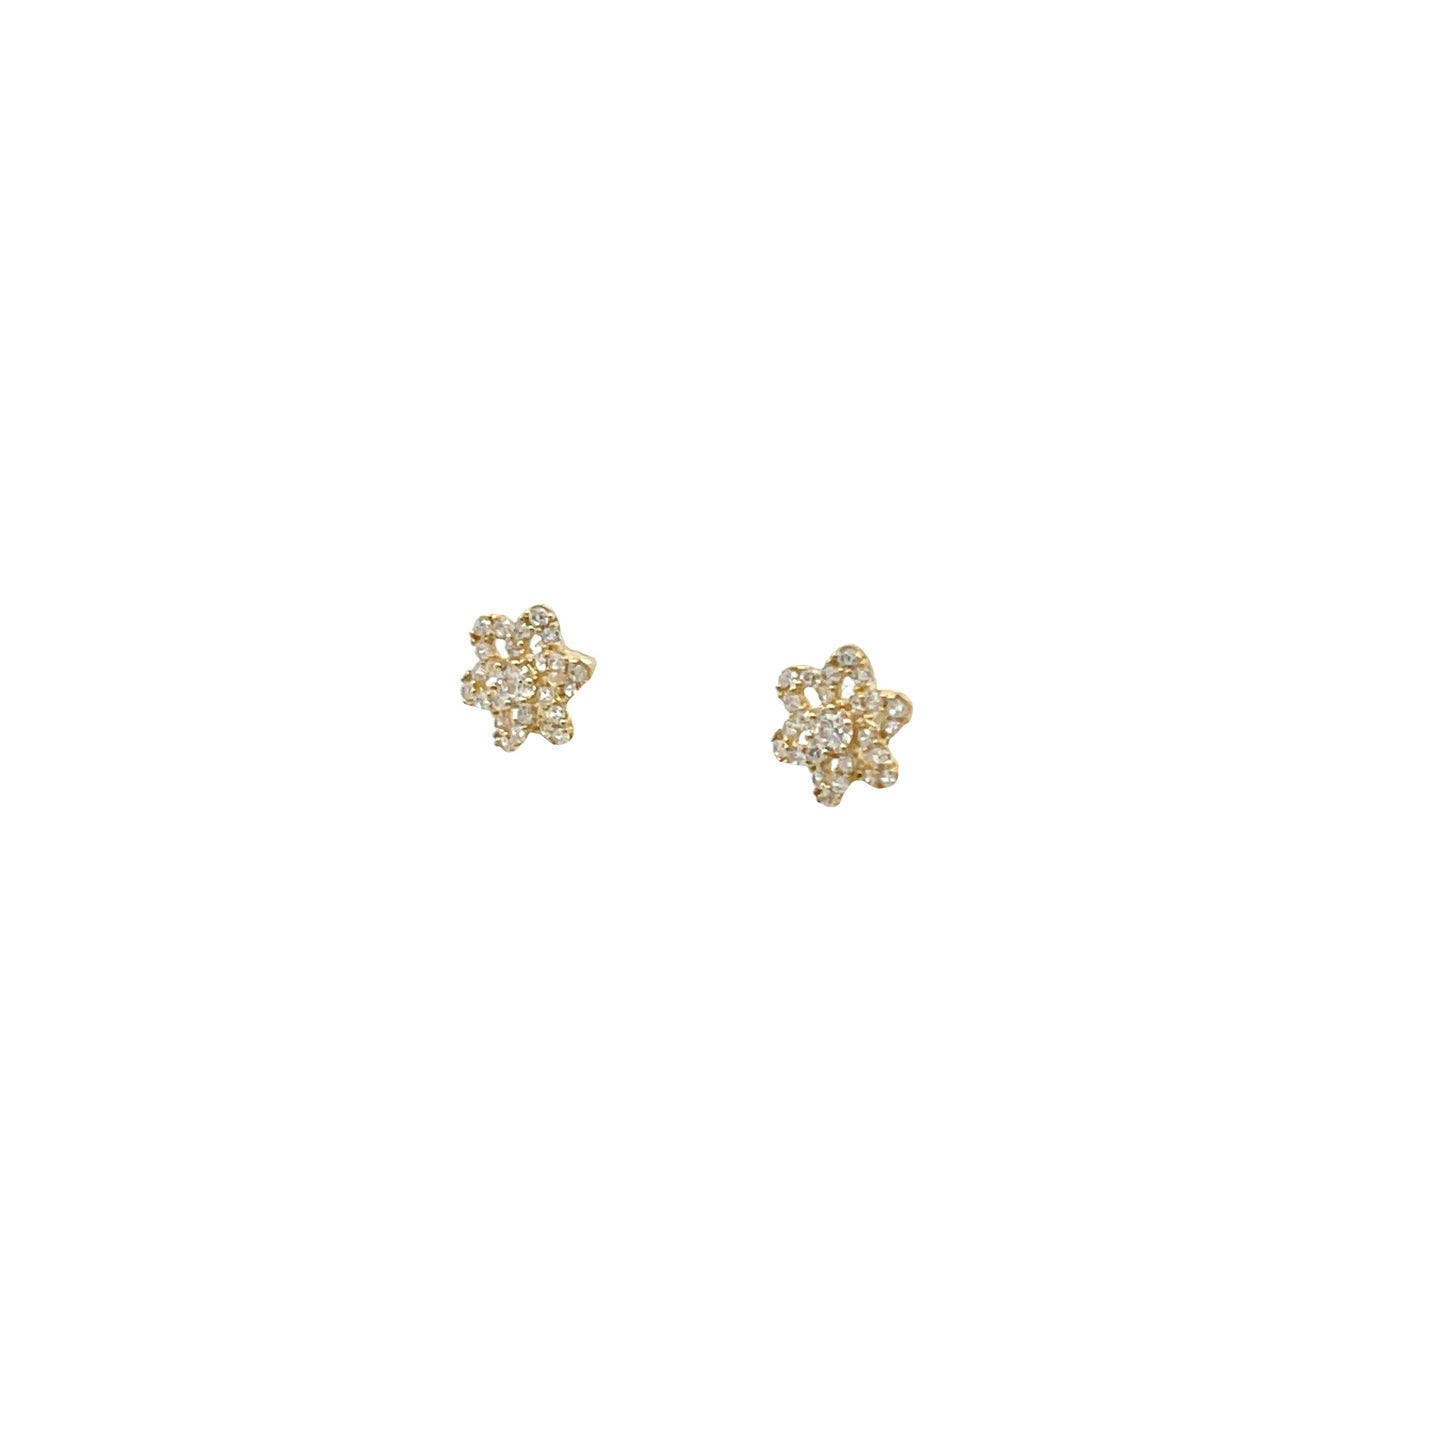 New 14K CZ Flower Women’s Earrings H.J™️